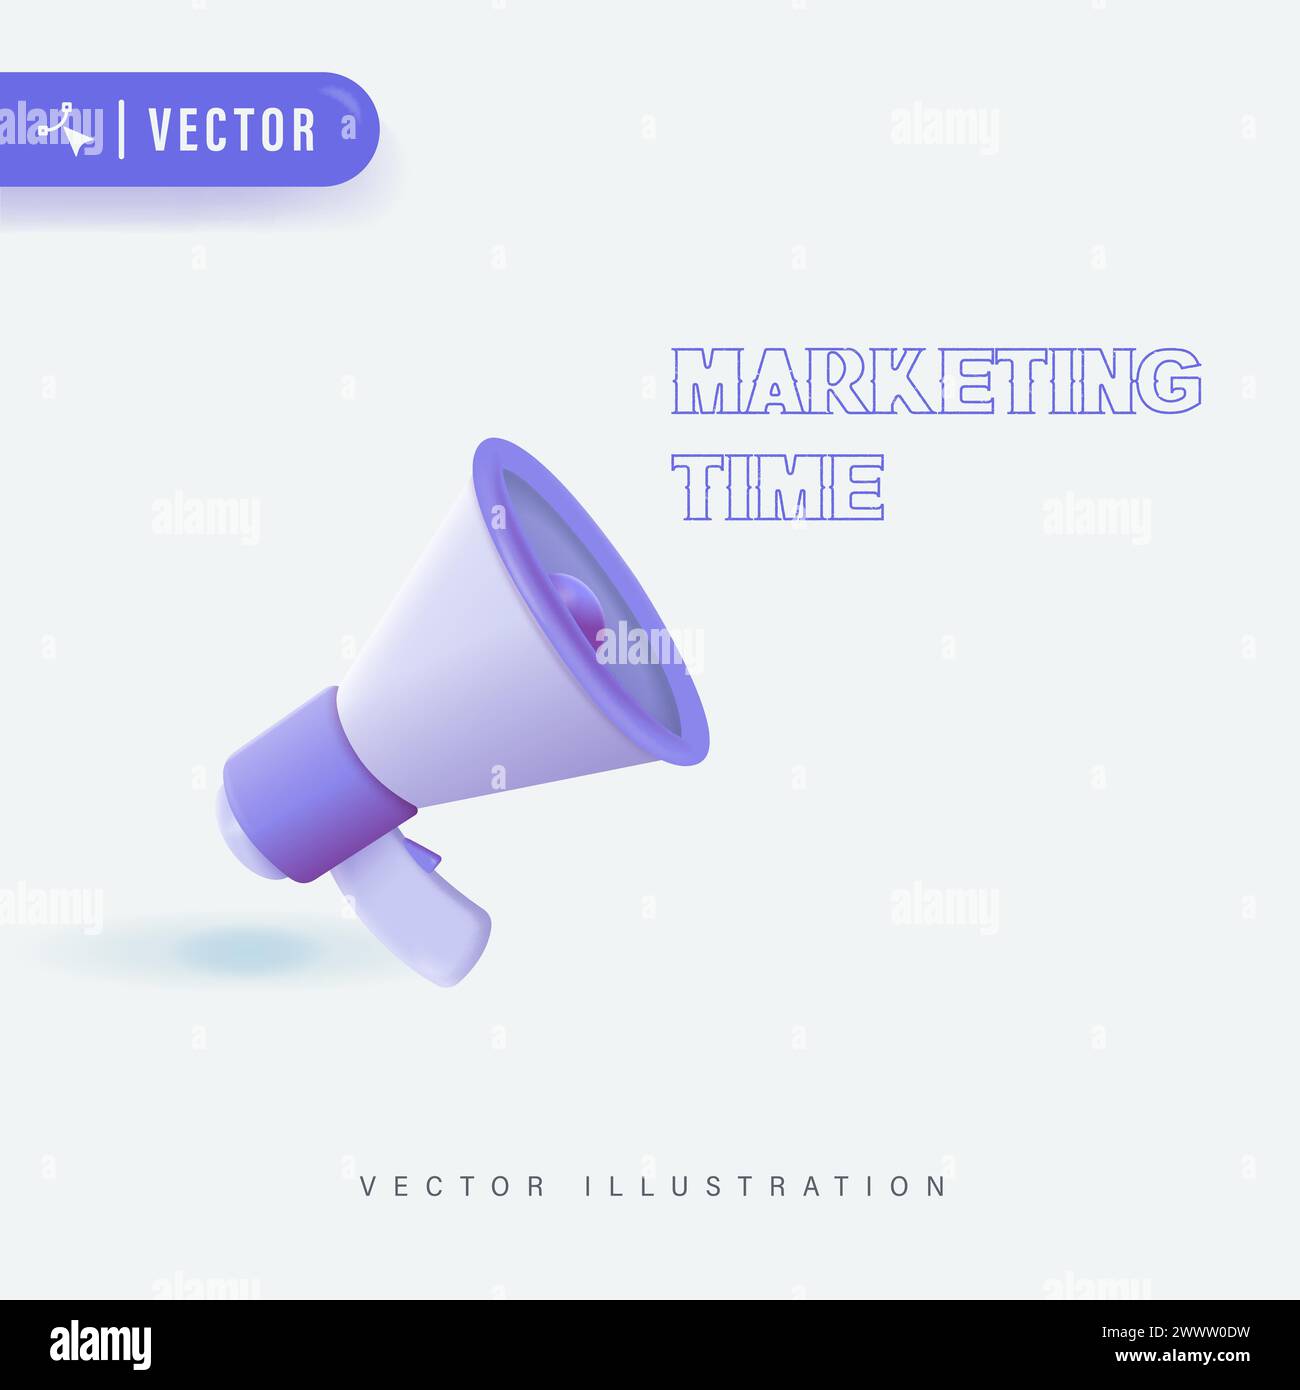 Marketing Time Concept with Purple Megaphone Vector Illustration. Loudspeaker for Digital Marketing Design Stock Vector